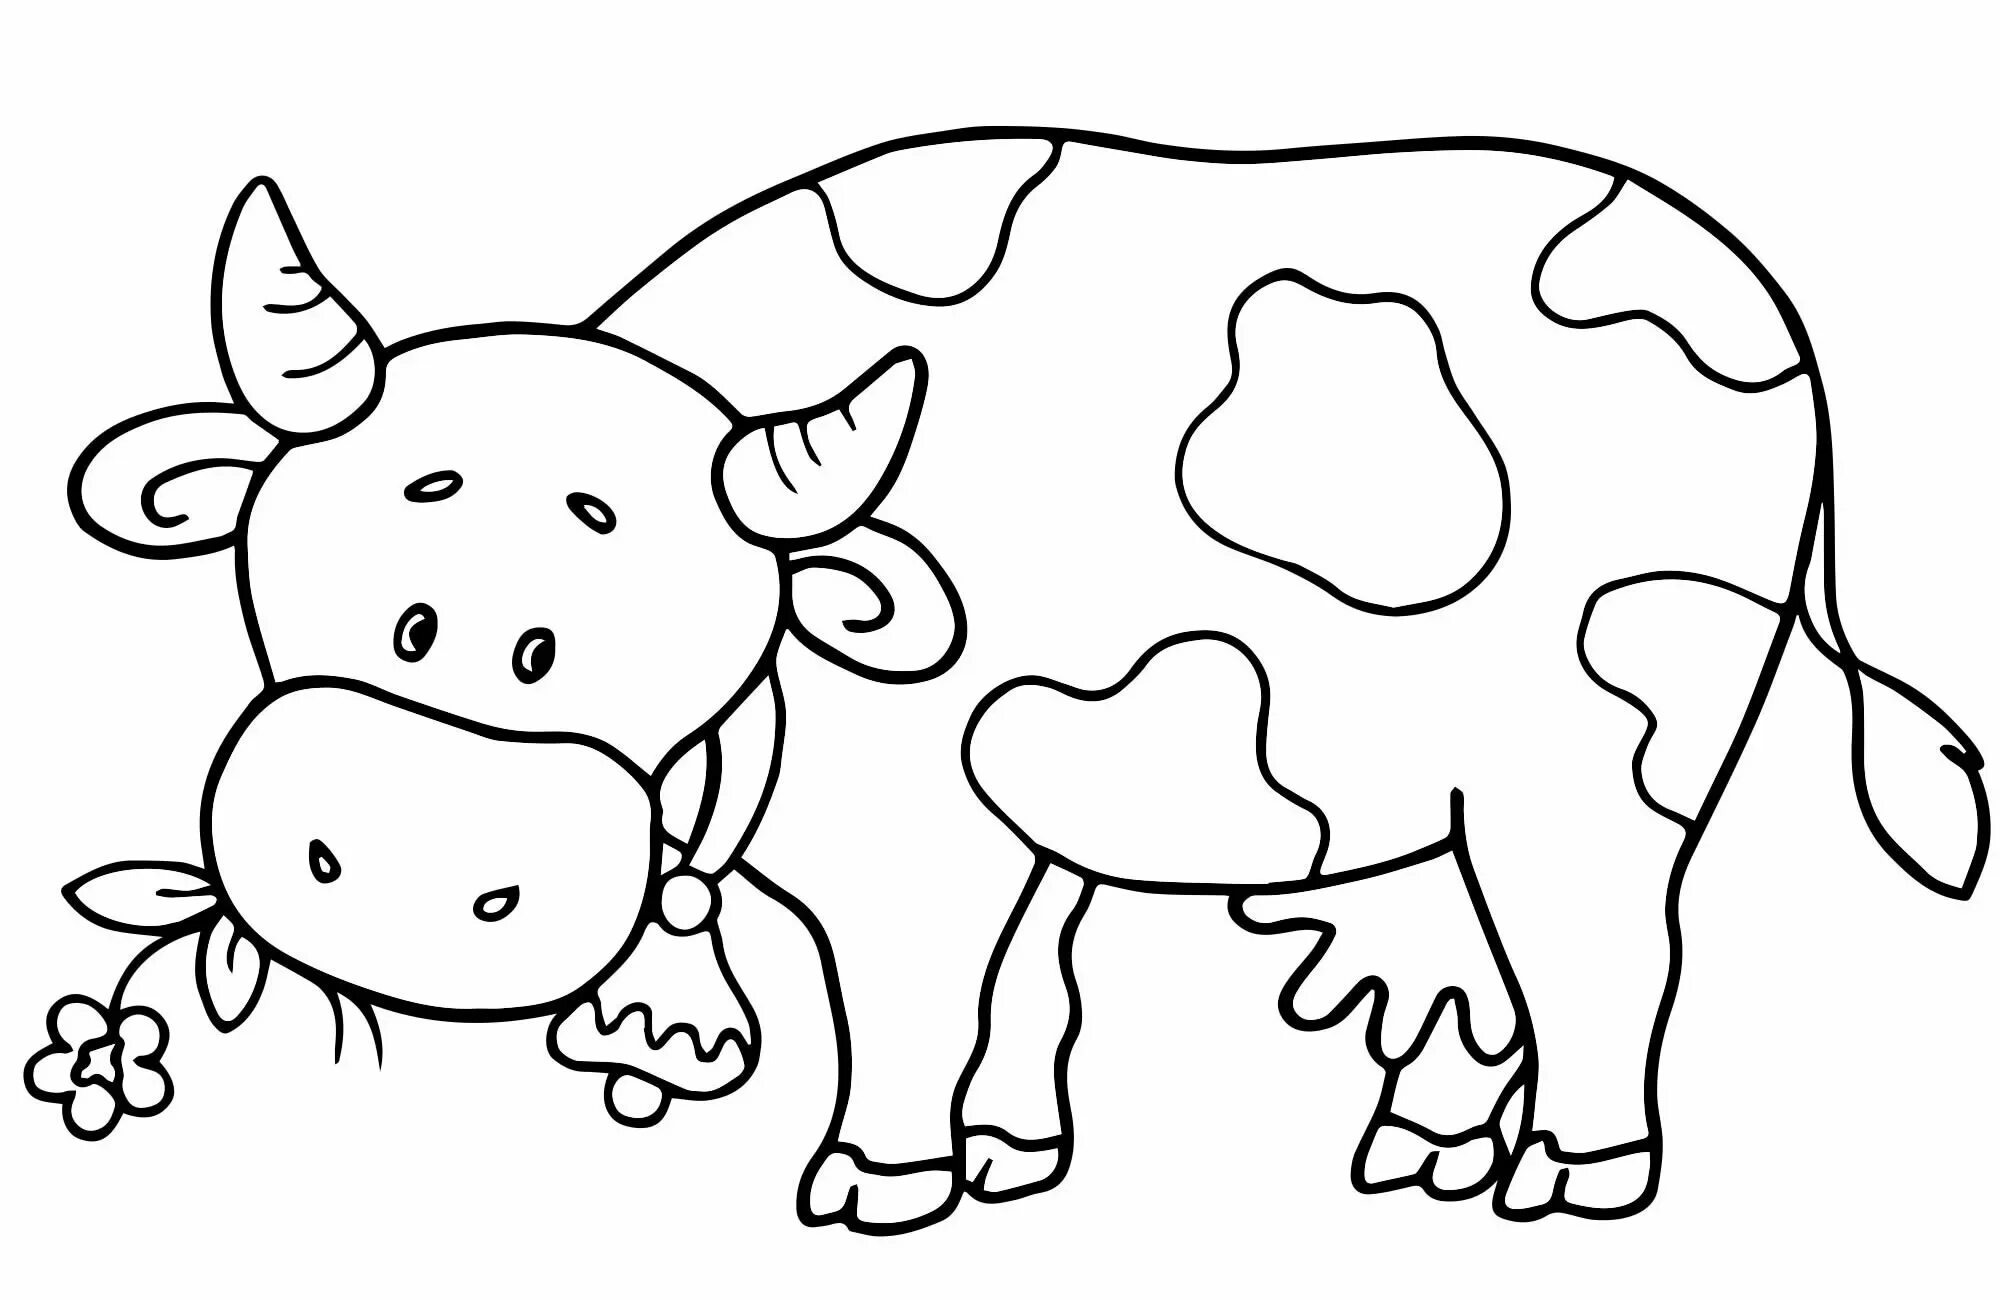 Раскраски коровки для детей. Раскраска корова. Корова раскраска для детей. Корова раскраска для малышей. Корова картинка для детей раскраска.